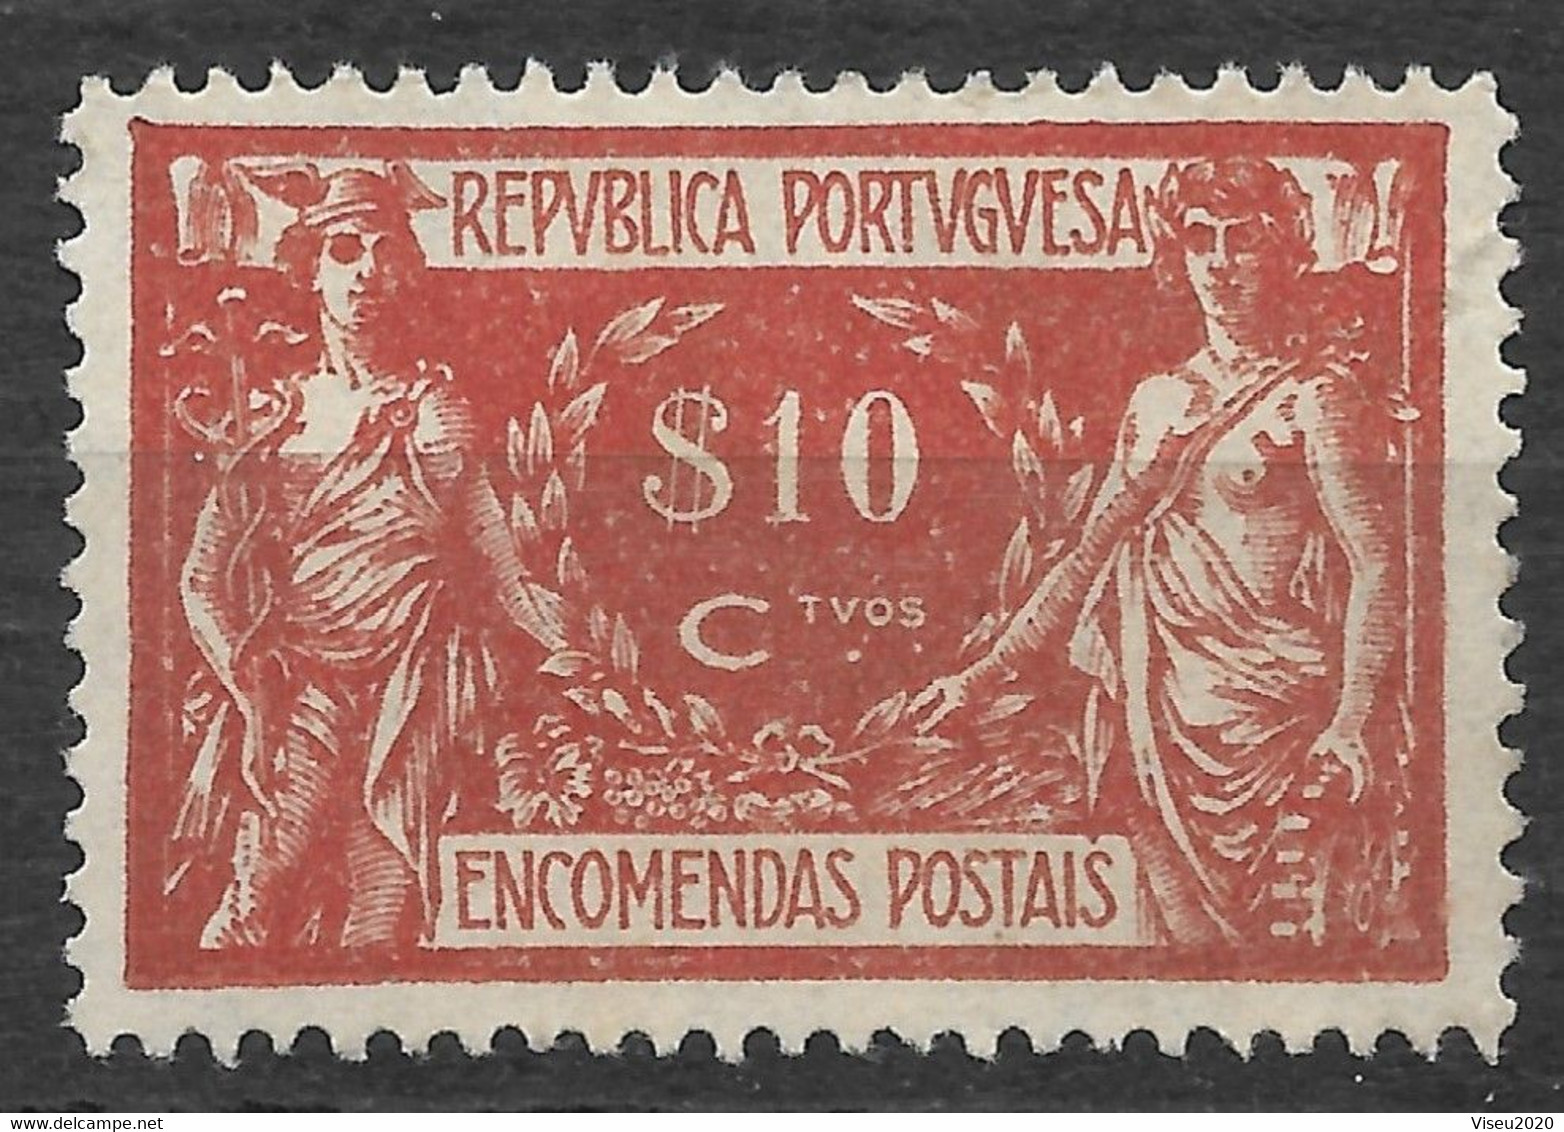 Portugal 1920 - Encomendas Postais - Comercio E Industria - Afinsa 04 - Nuovi